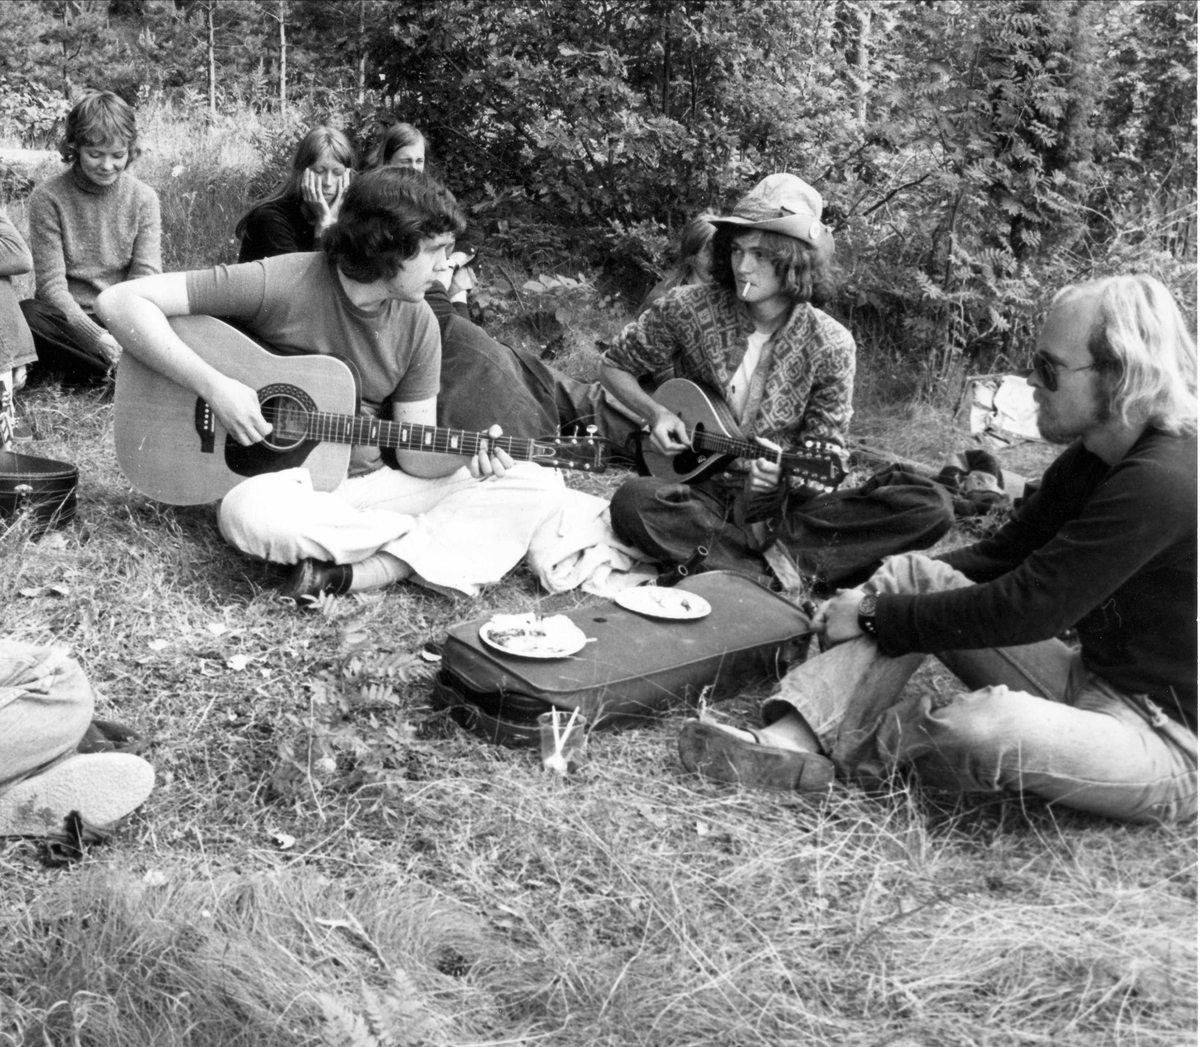 Folkrockgruppa Folque på Västervikfestivalen, 1976. Trond Villa med fele, Eilif Amundsen med gitar og Espen Løvstad med solbriller